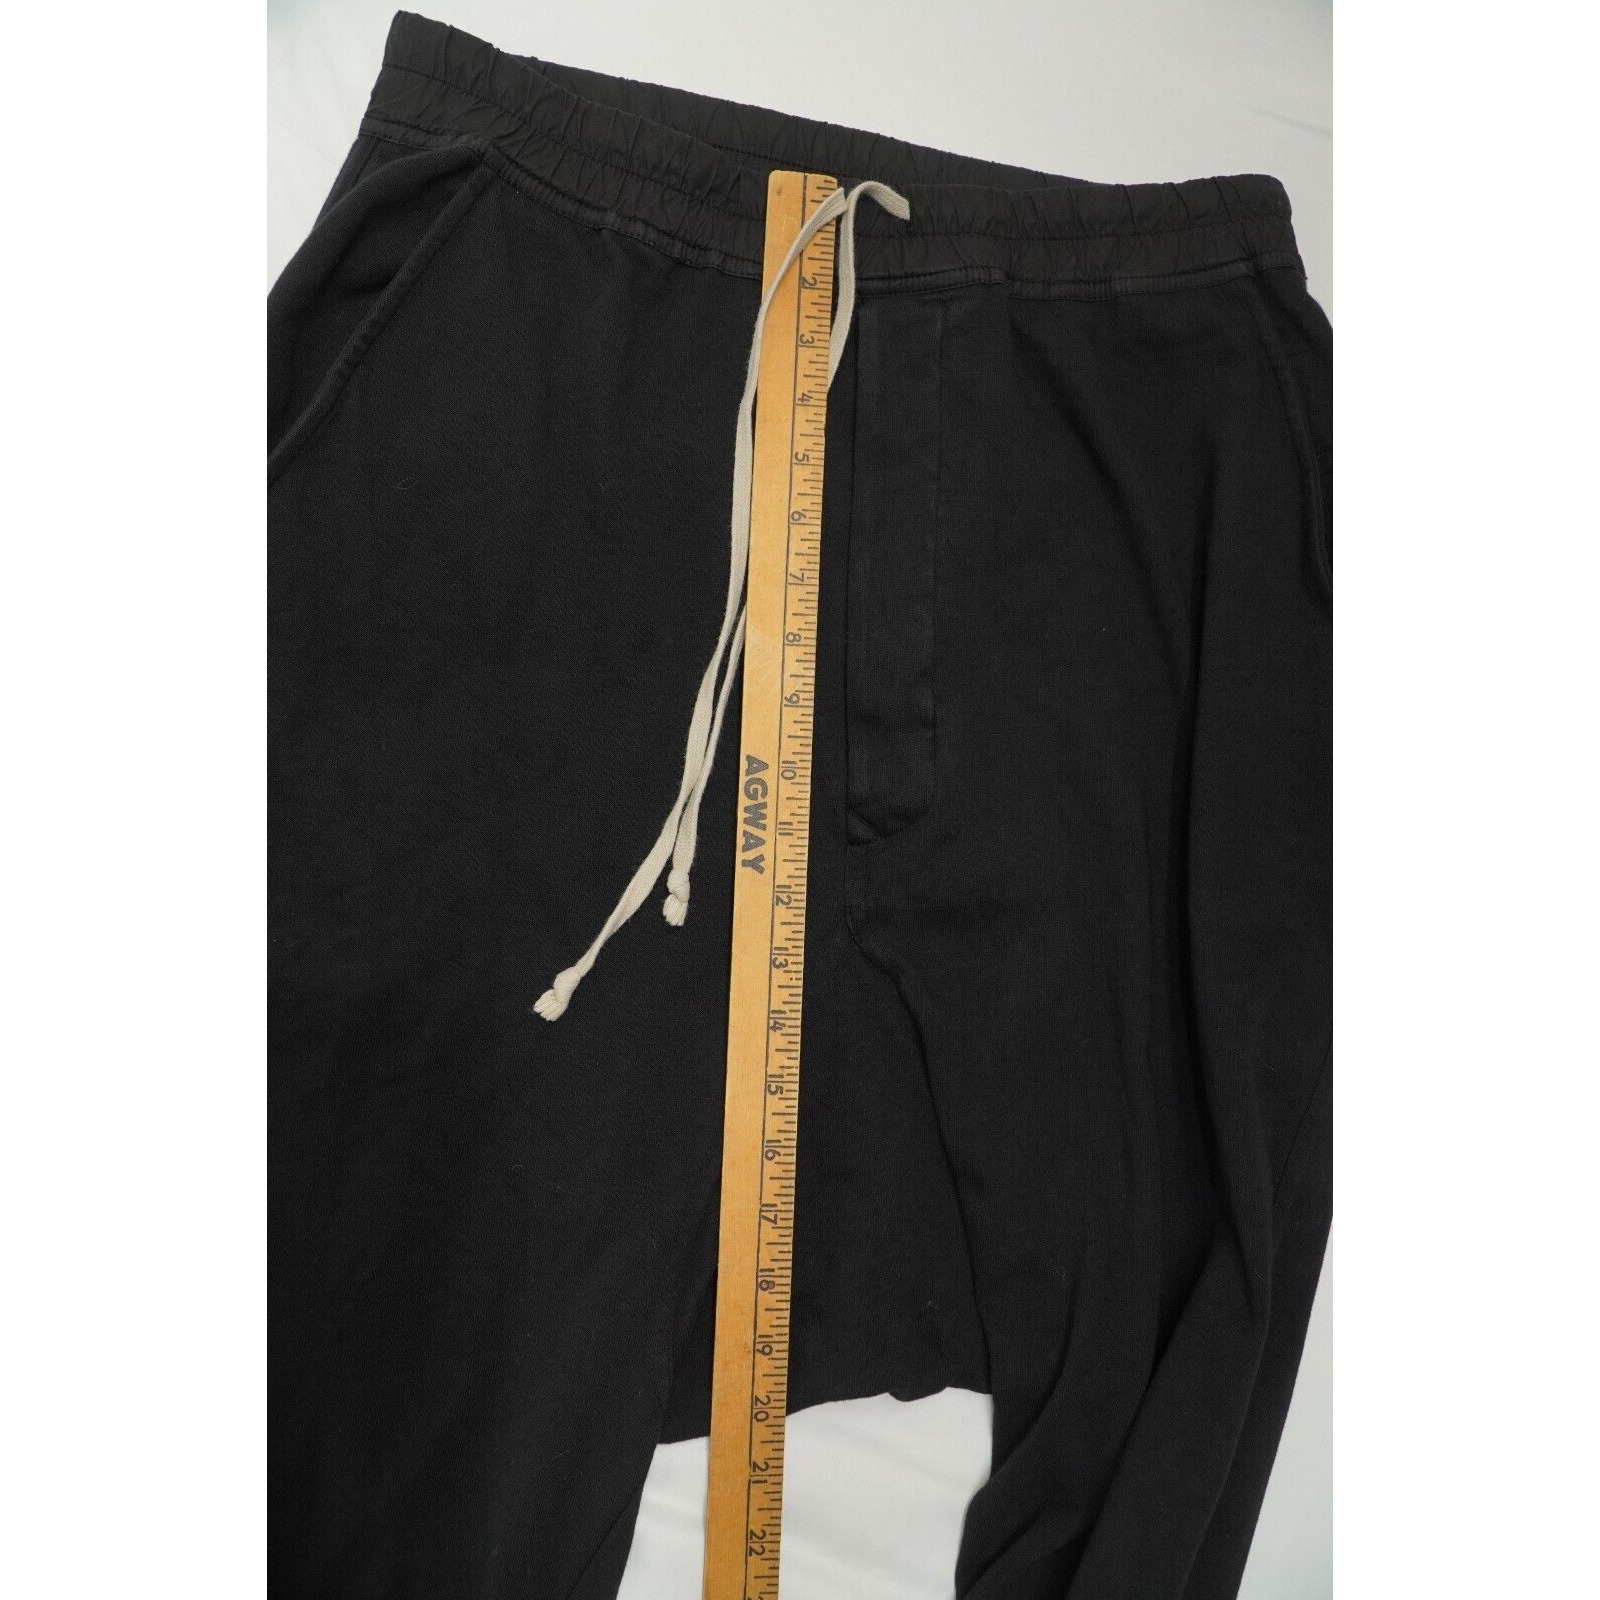 Rick Prisoner Black Pants Drop Crotch SS20 - M - 20